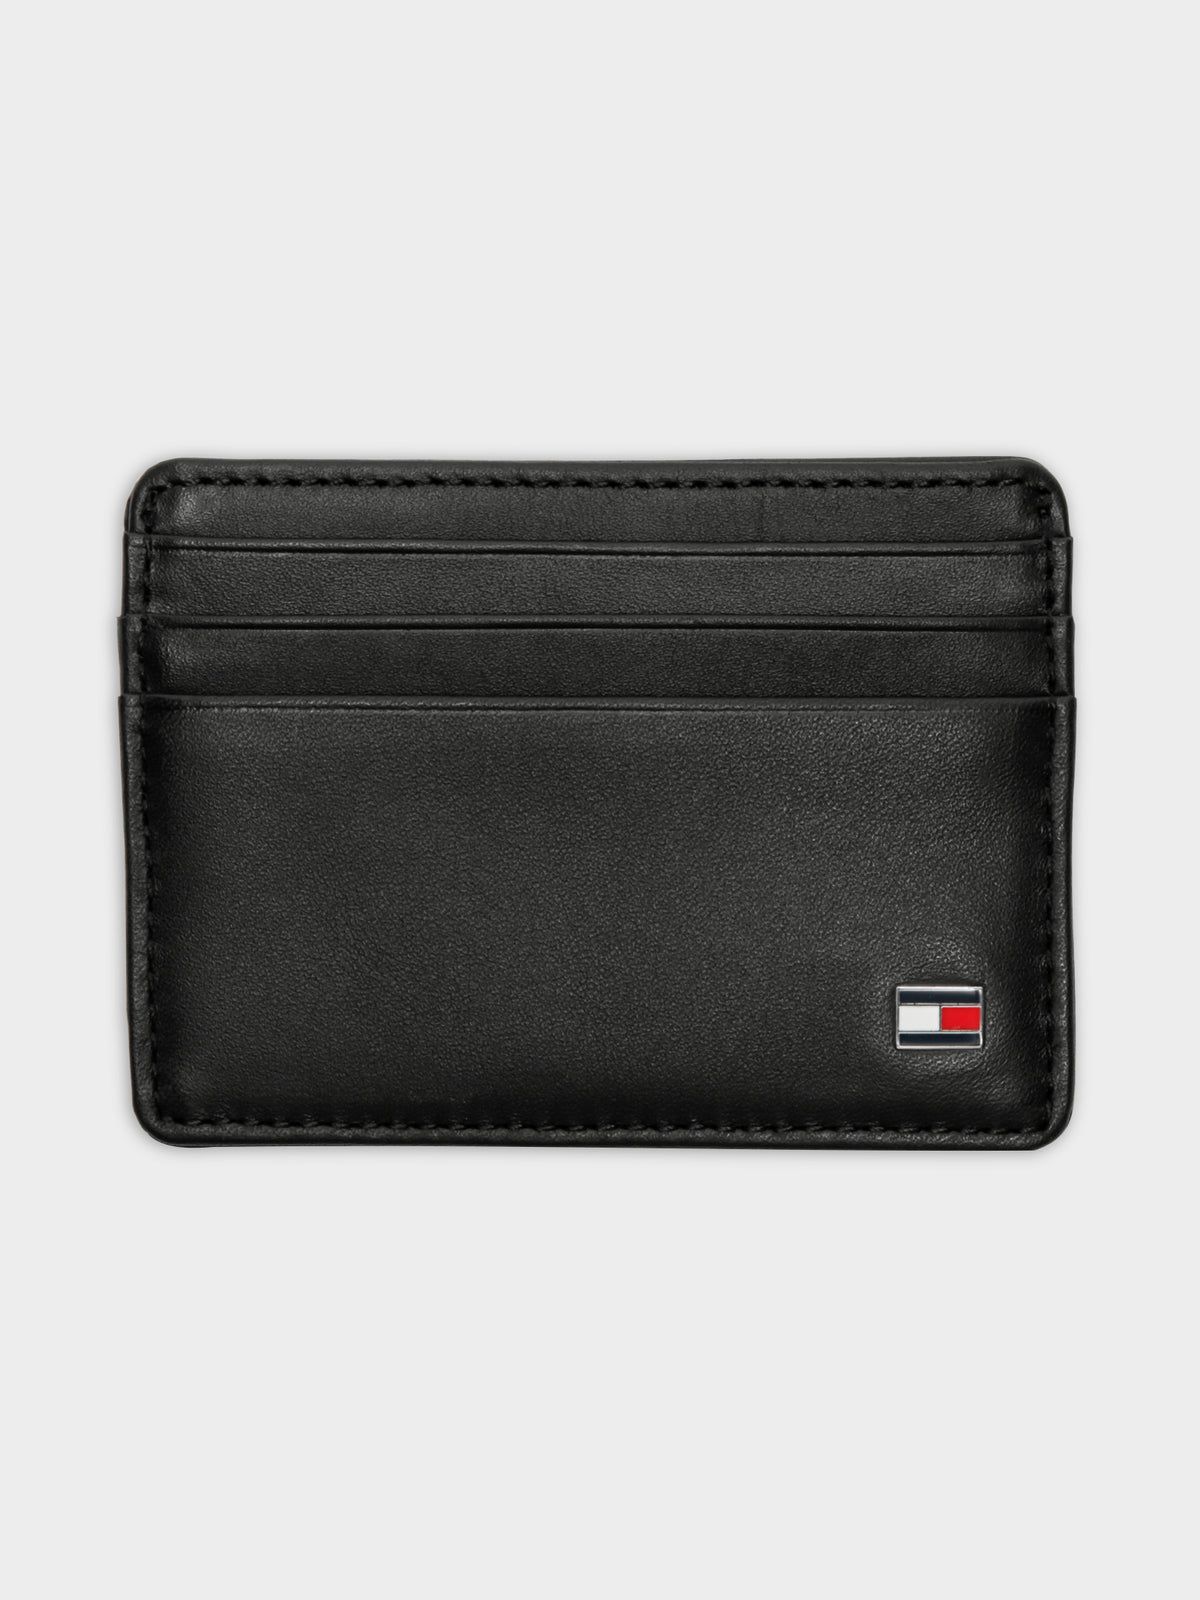 6 Card Holder Wallet in Black Leather